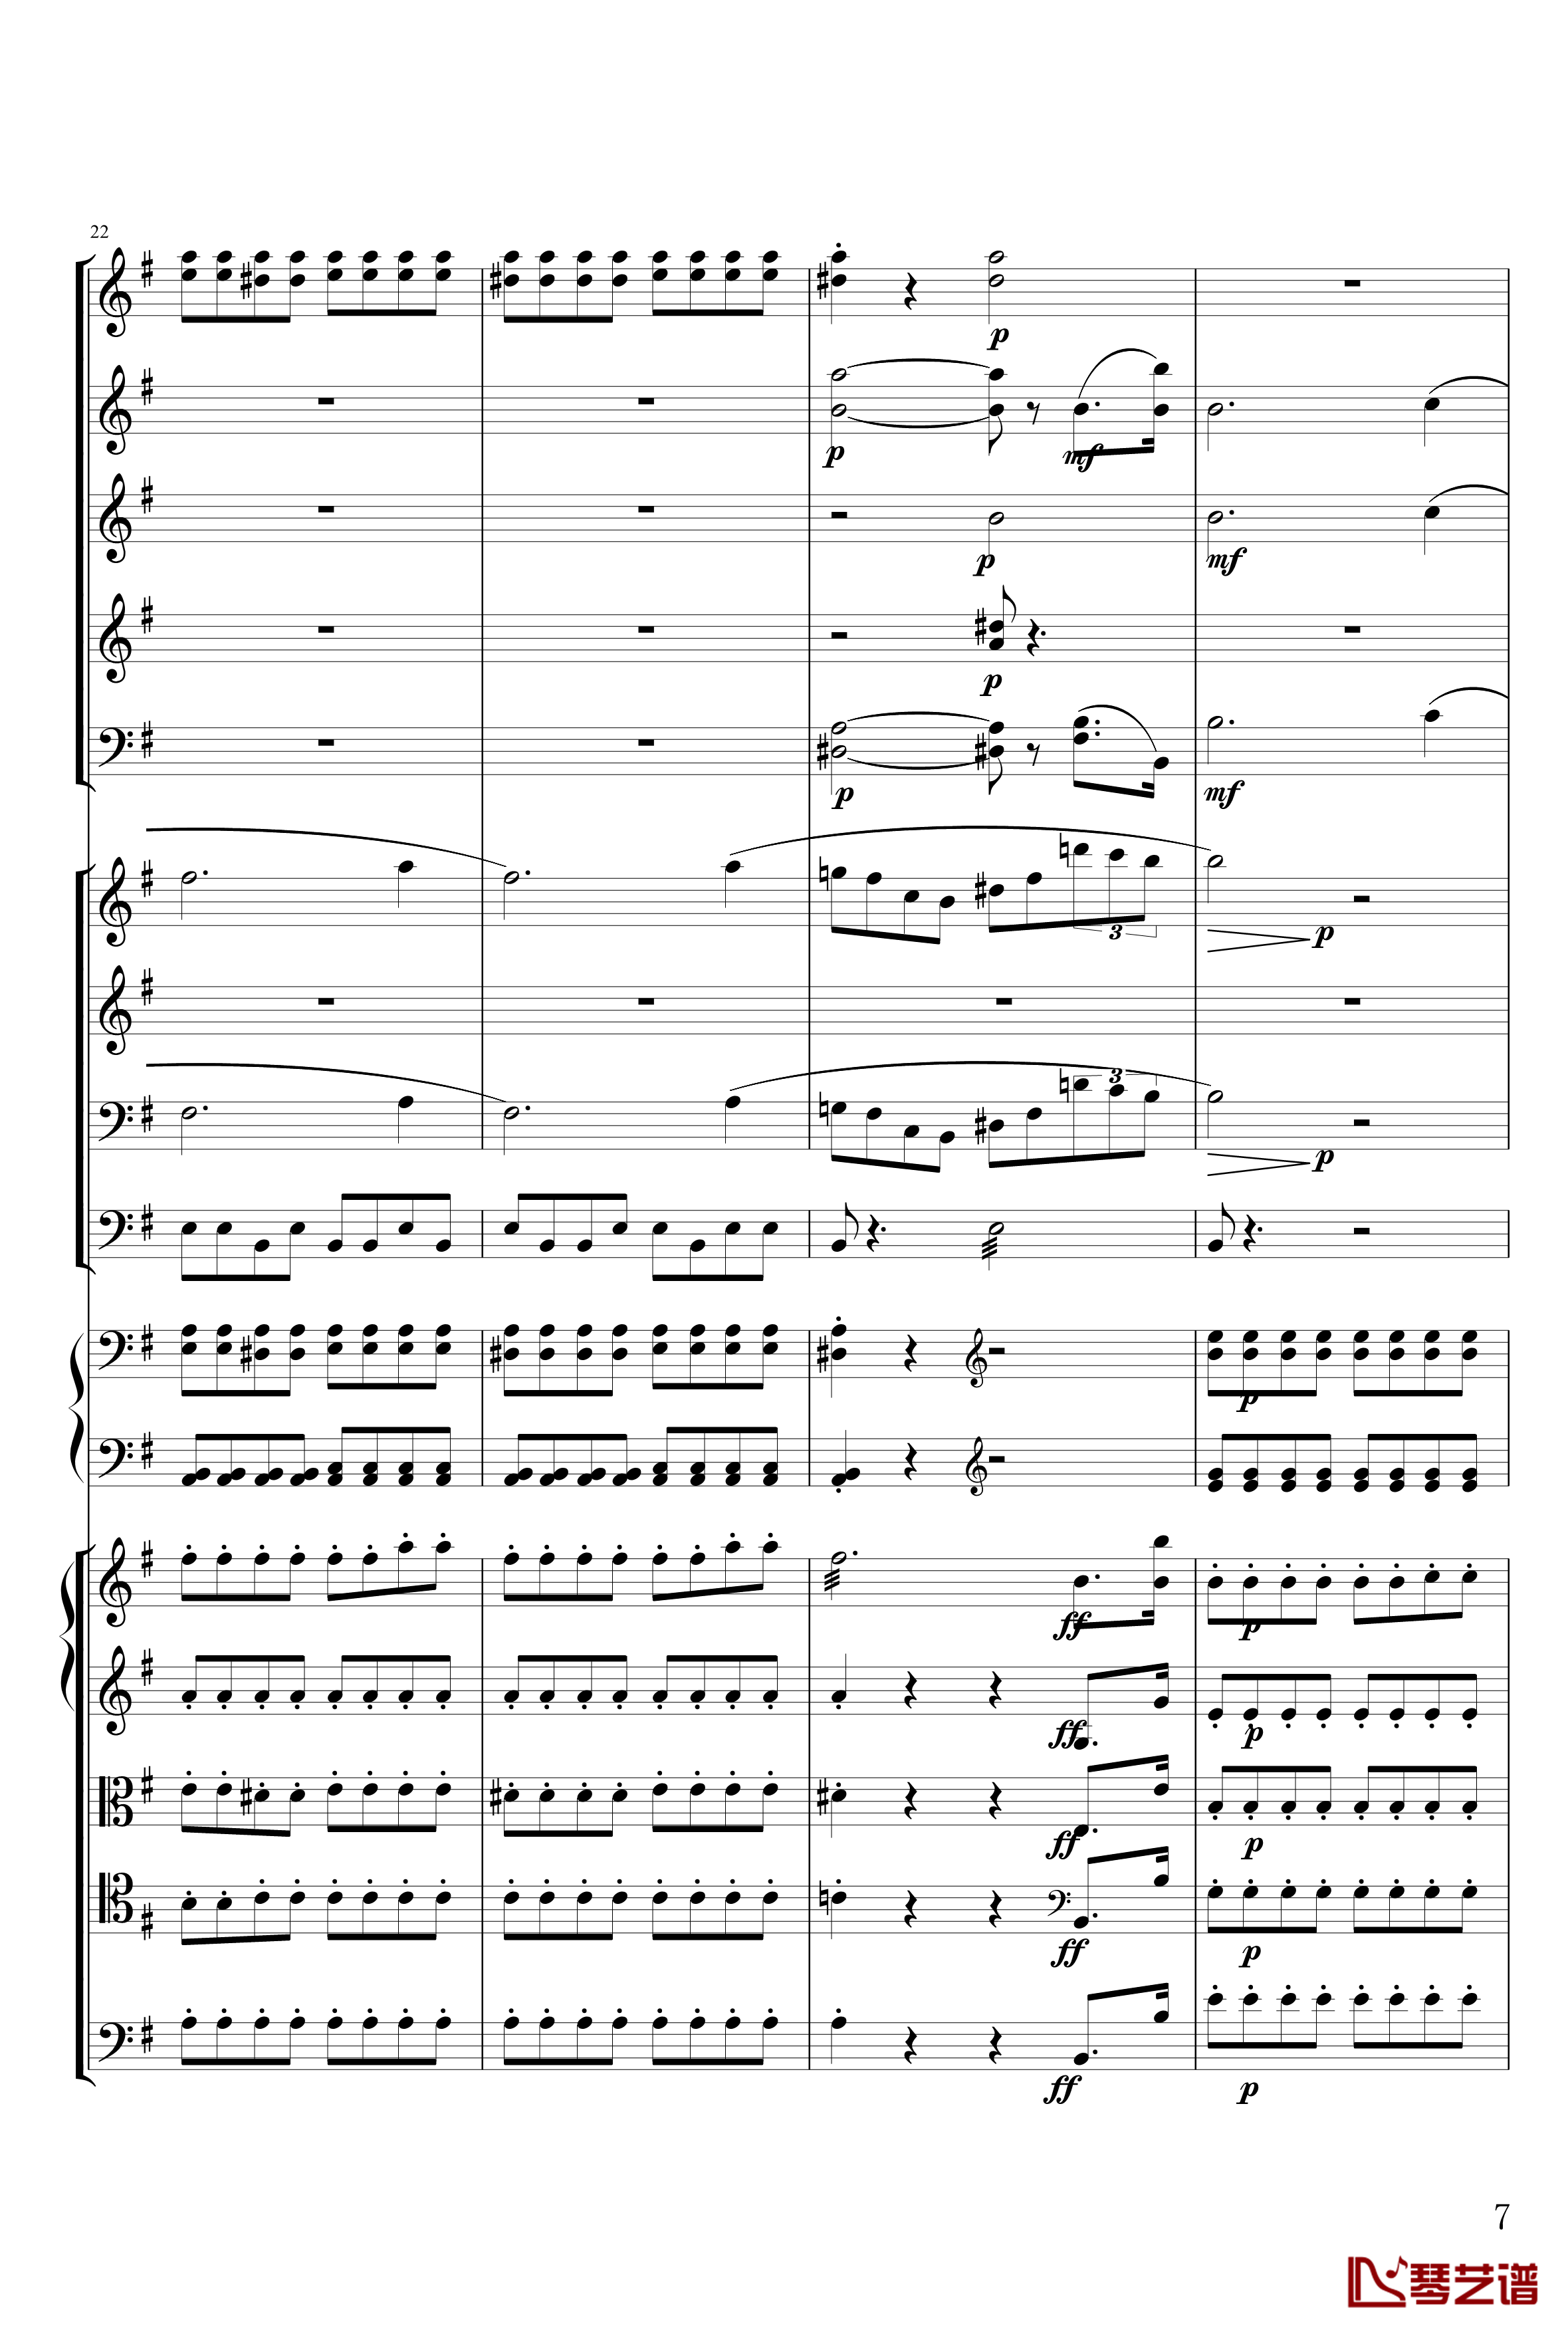 E小调前奏曲钢琴谱-交响乐版-肖邦-chopin7